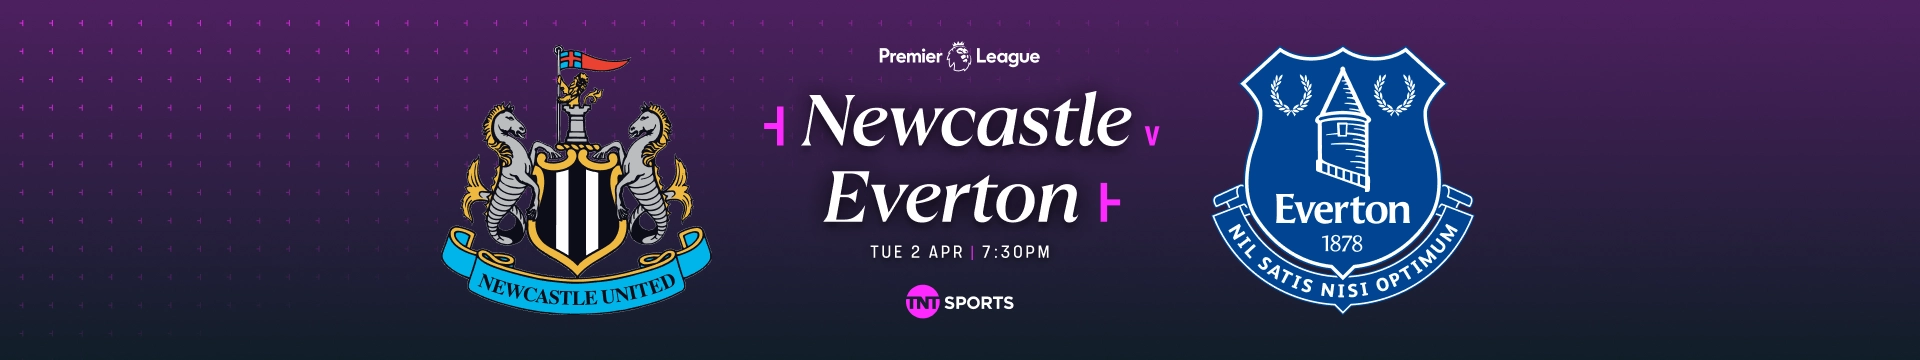 Newcastle v Everton Tuesday 2 April at 7:30pm